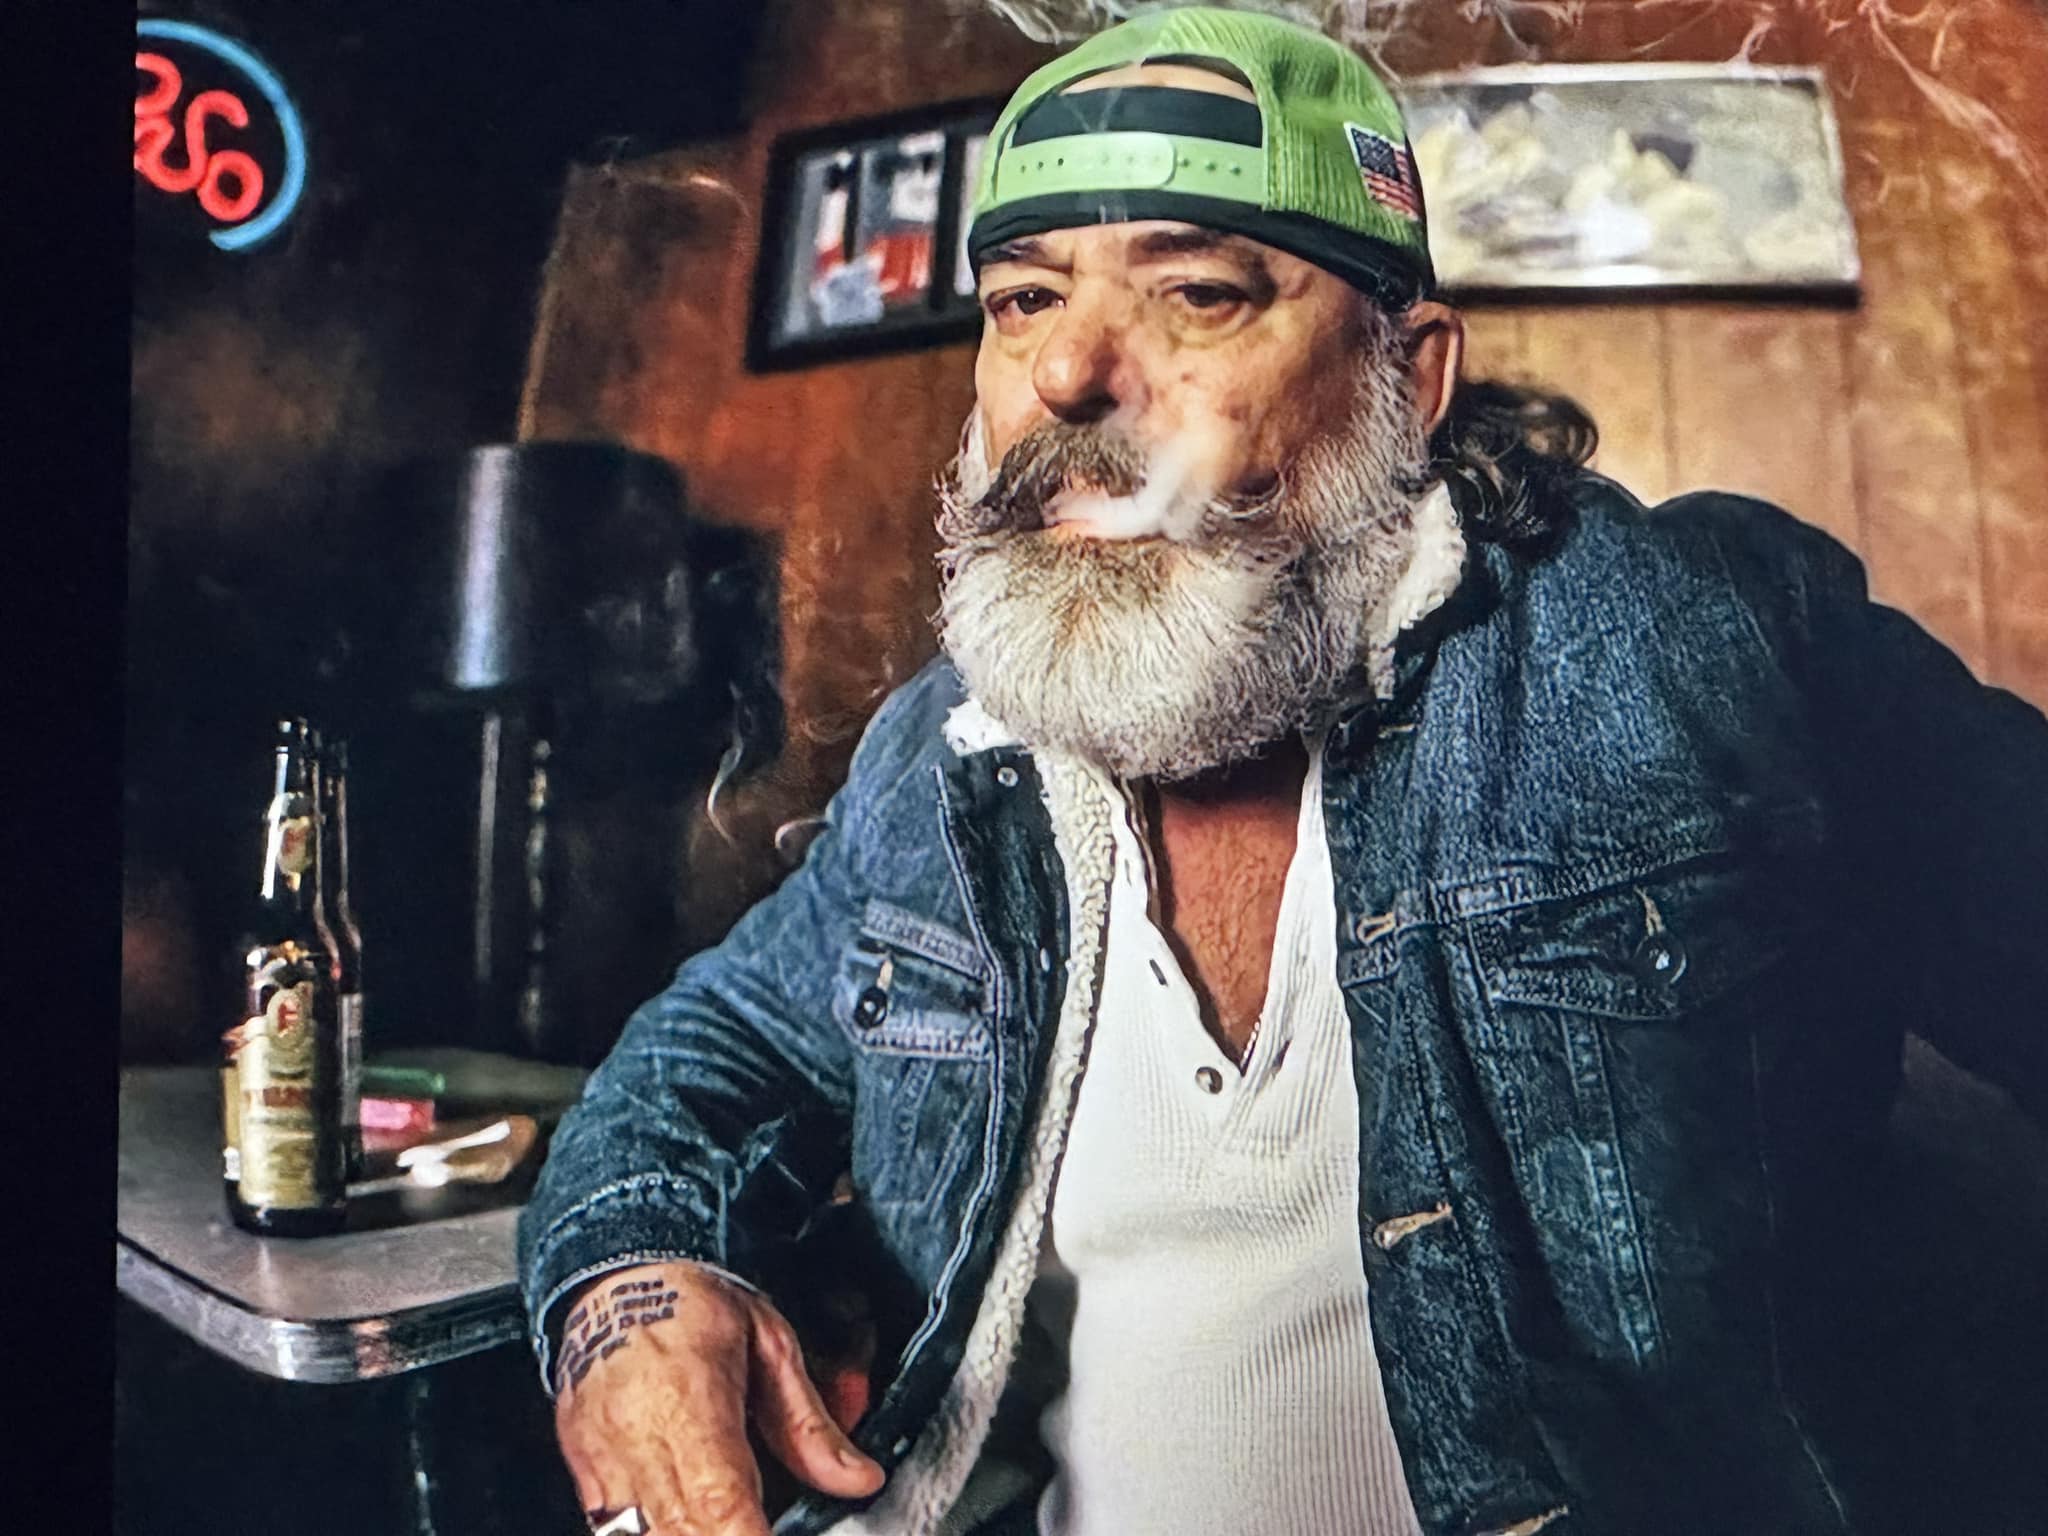 A man with a beard in a backward baseball cap sits in a bar smoking.